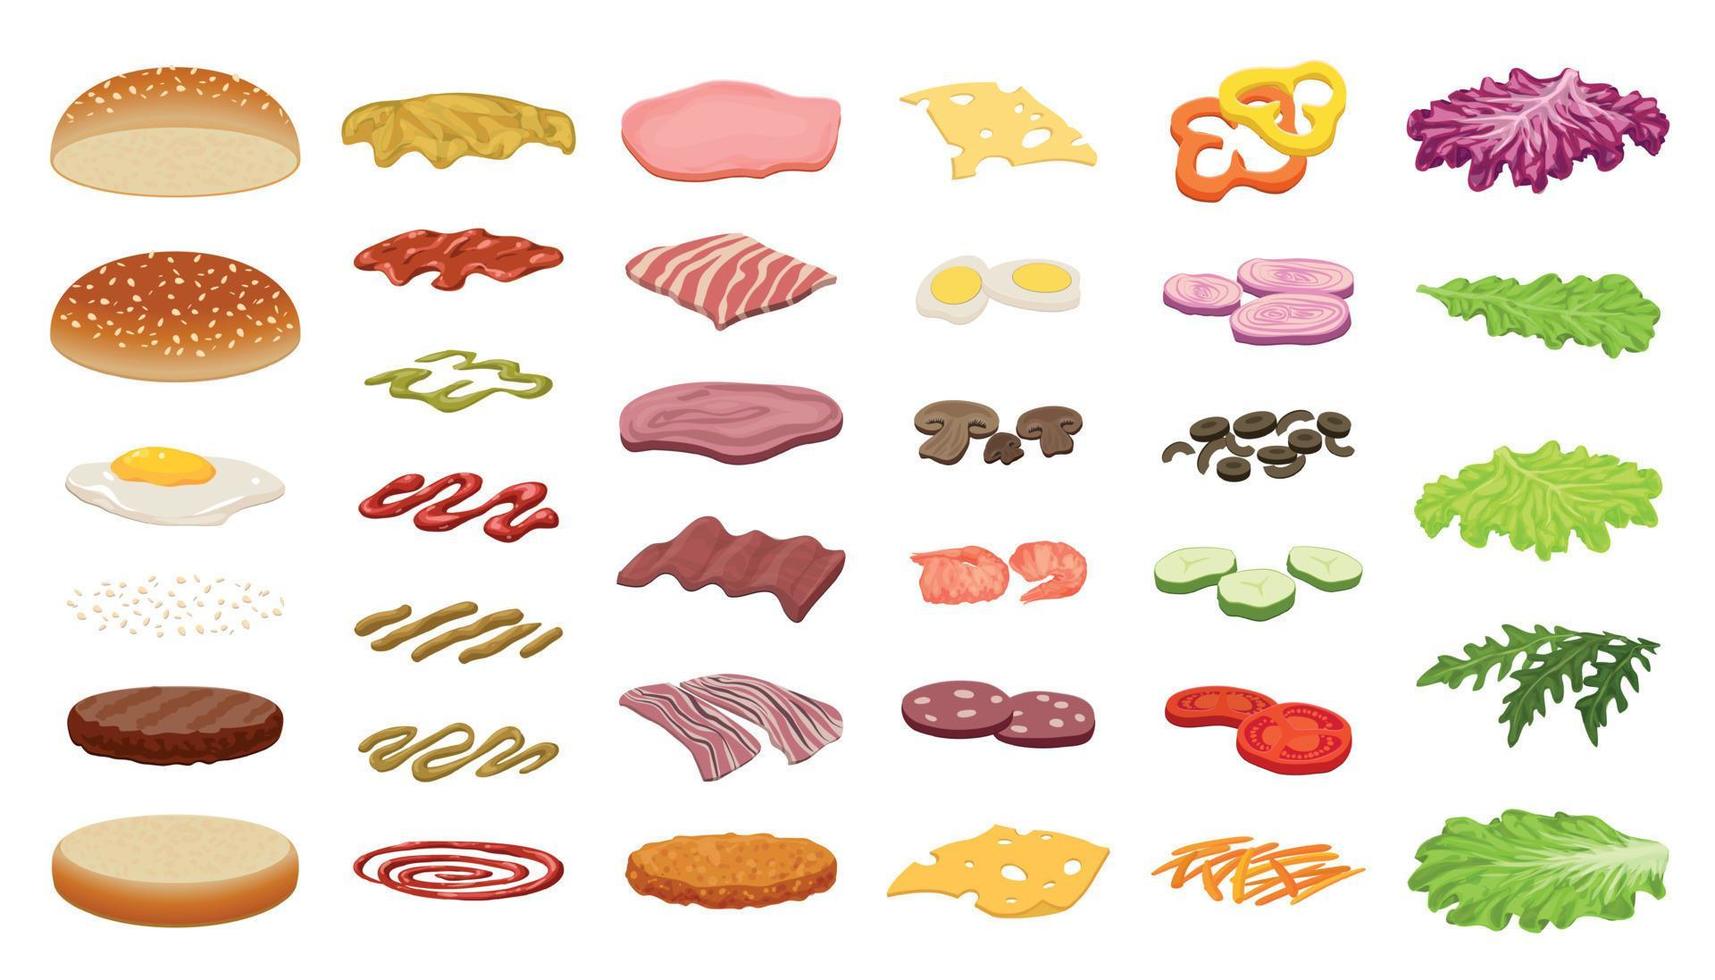 Burger icons set, cartoon style vector